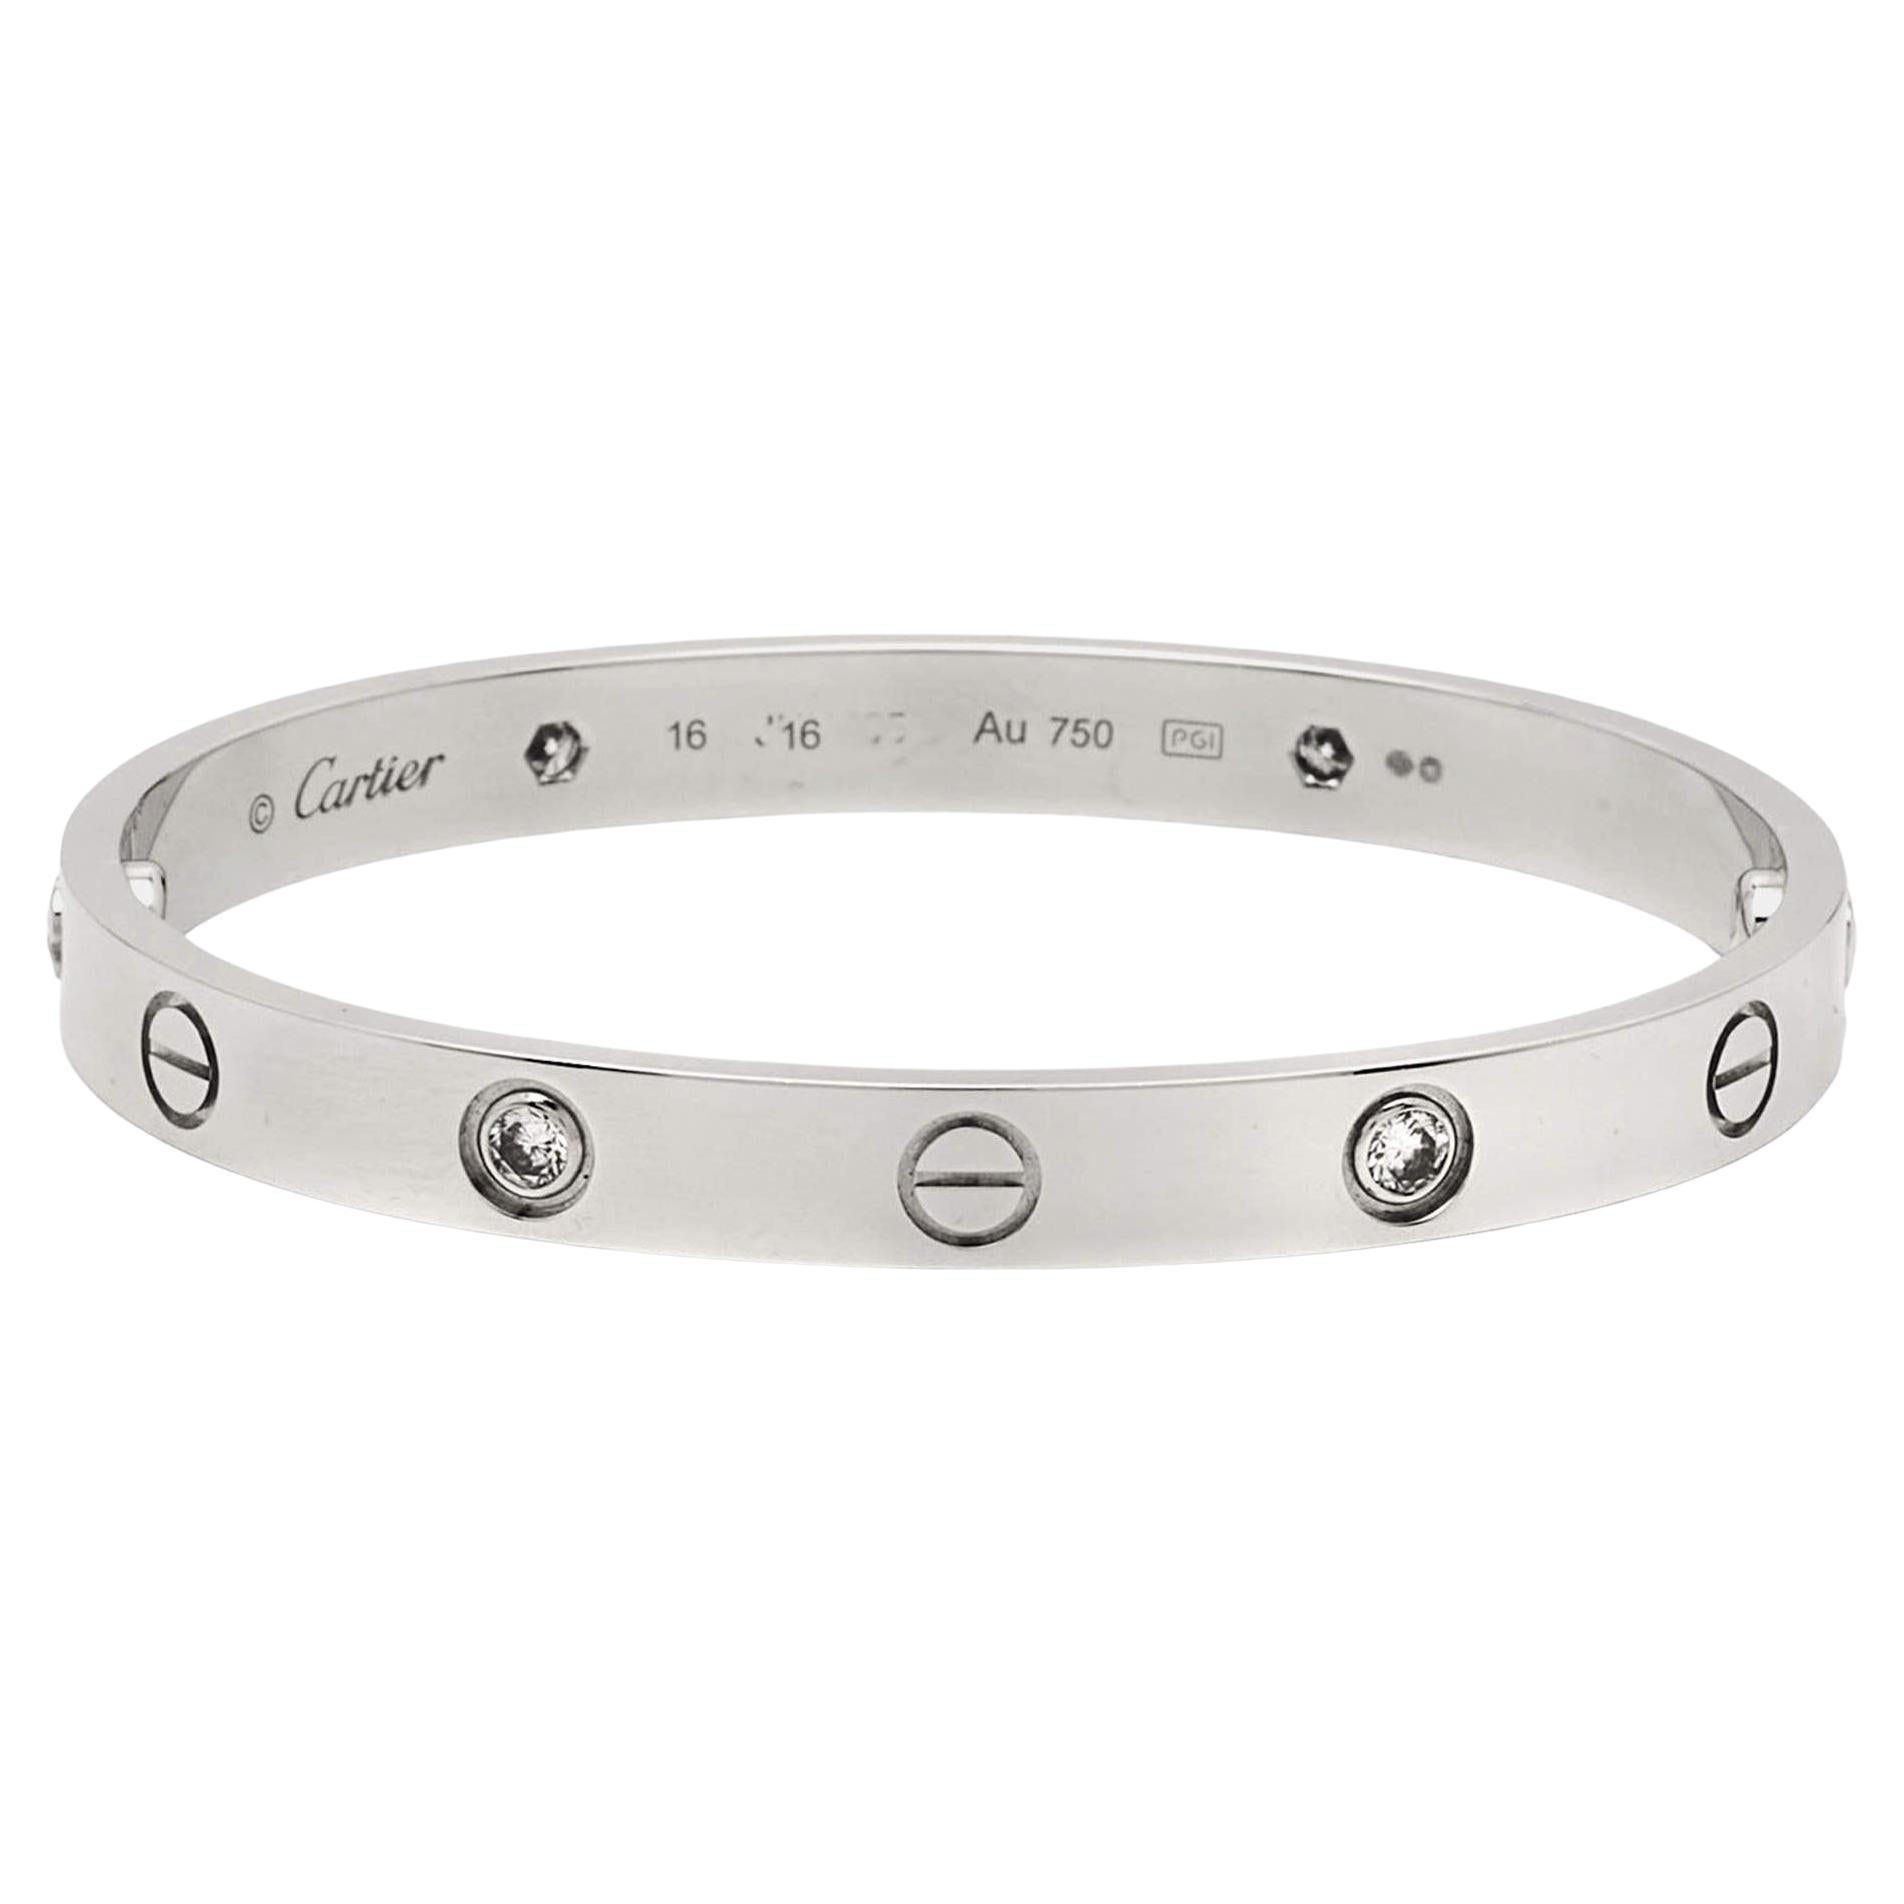 What size Cartier Love bracelet should I get?